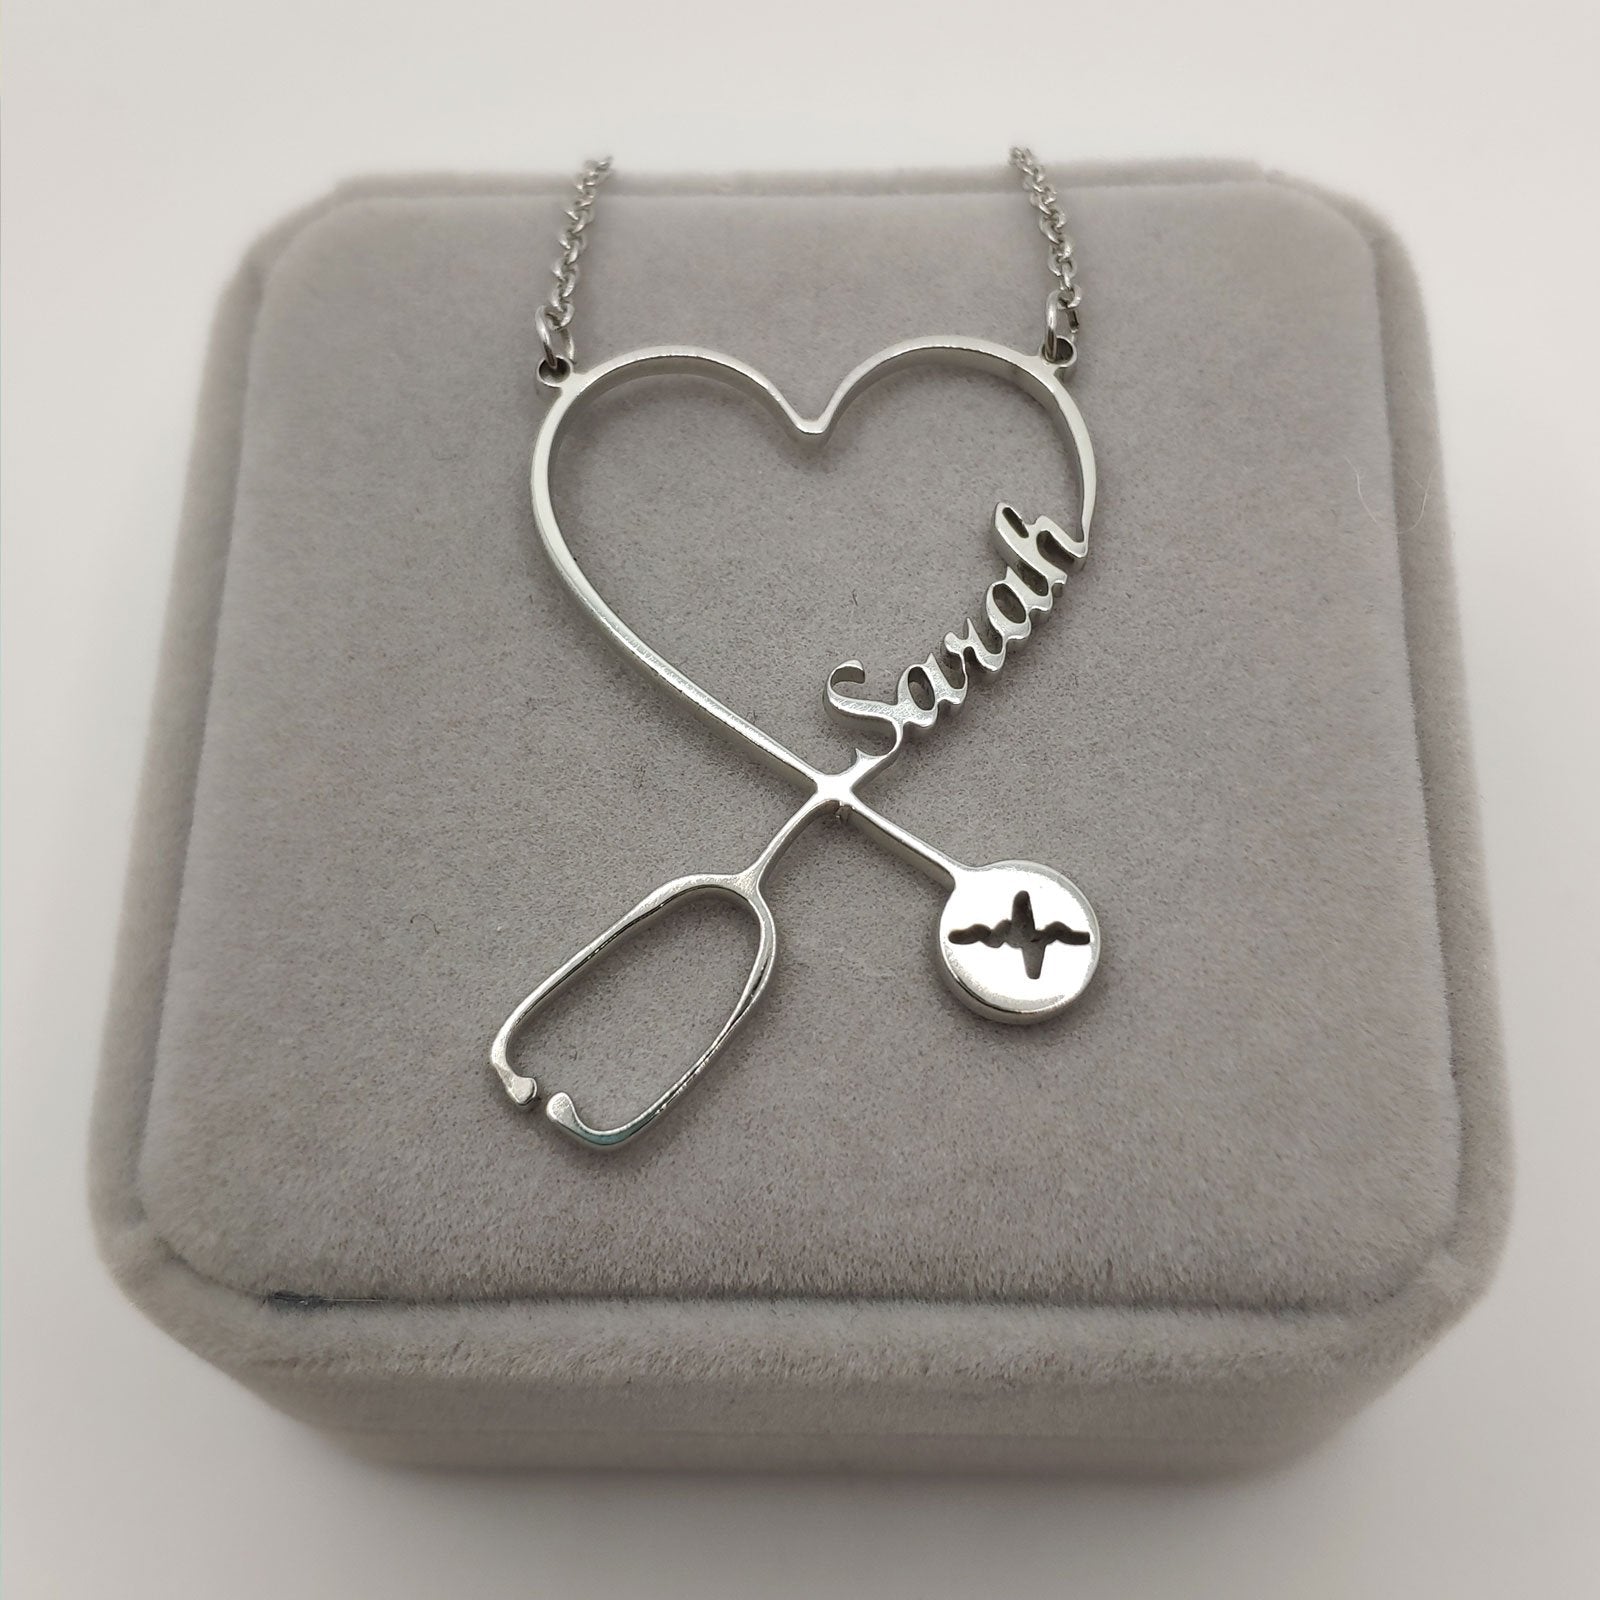 Handmade Personalized Stethoscope Necklace